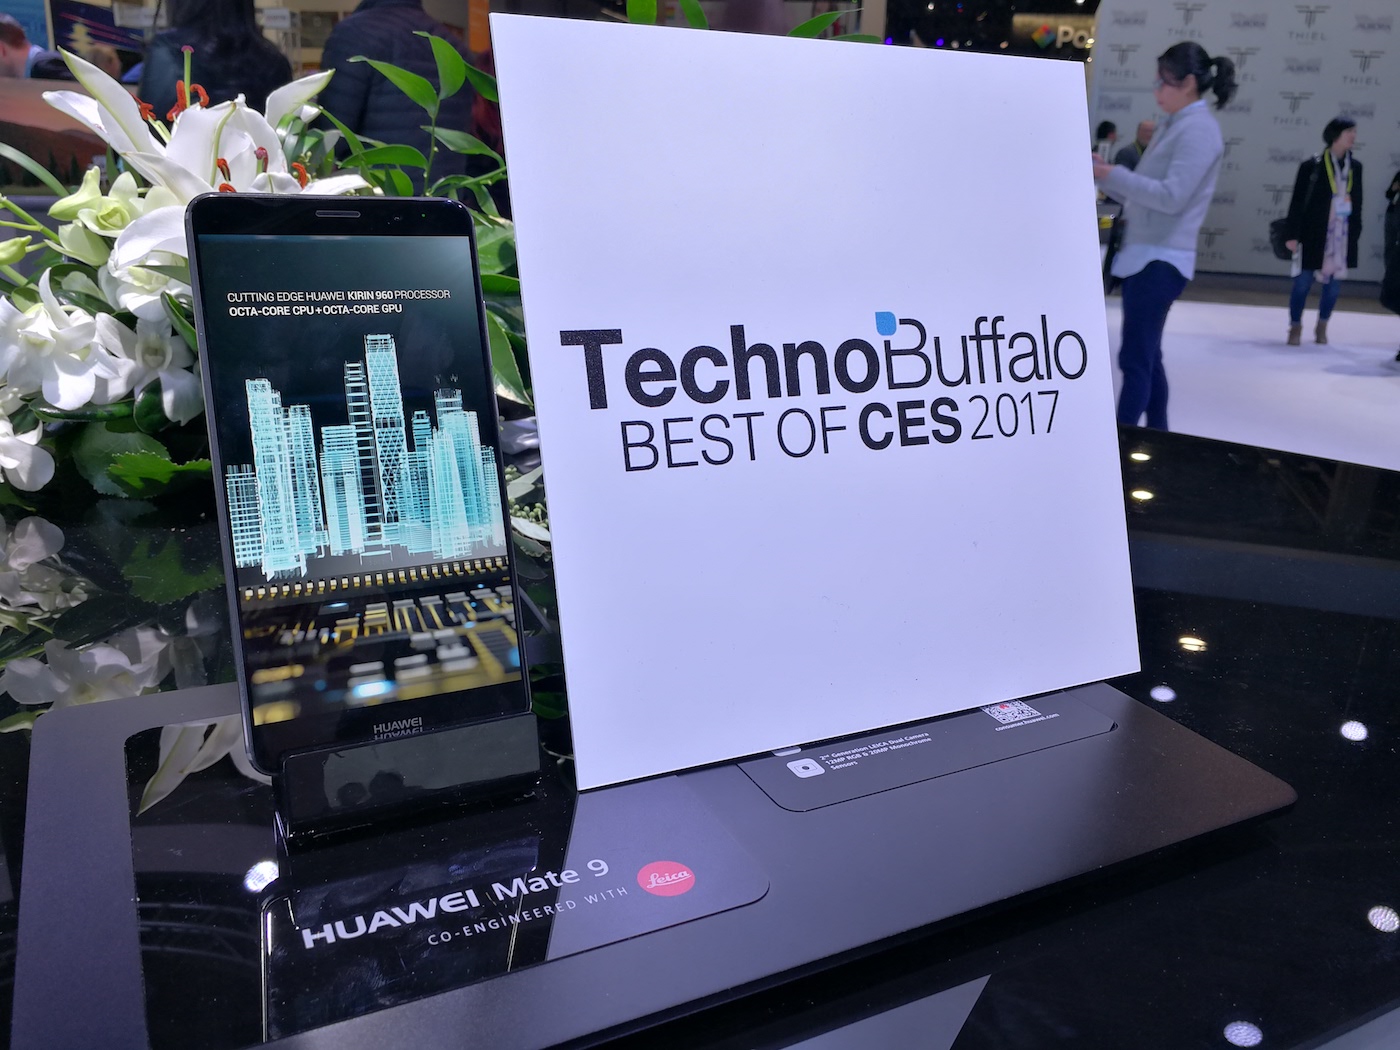 Huawei Mate 9 TechnoBuffalo CES 2017 award